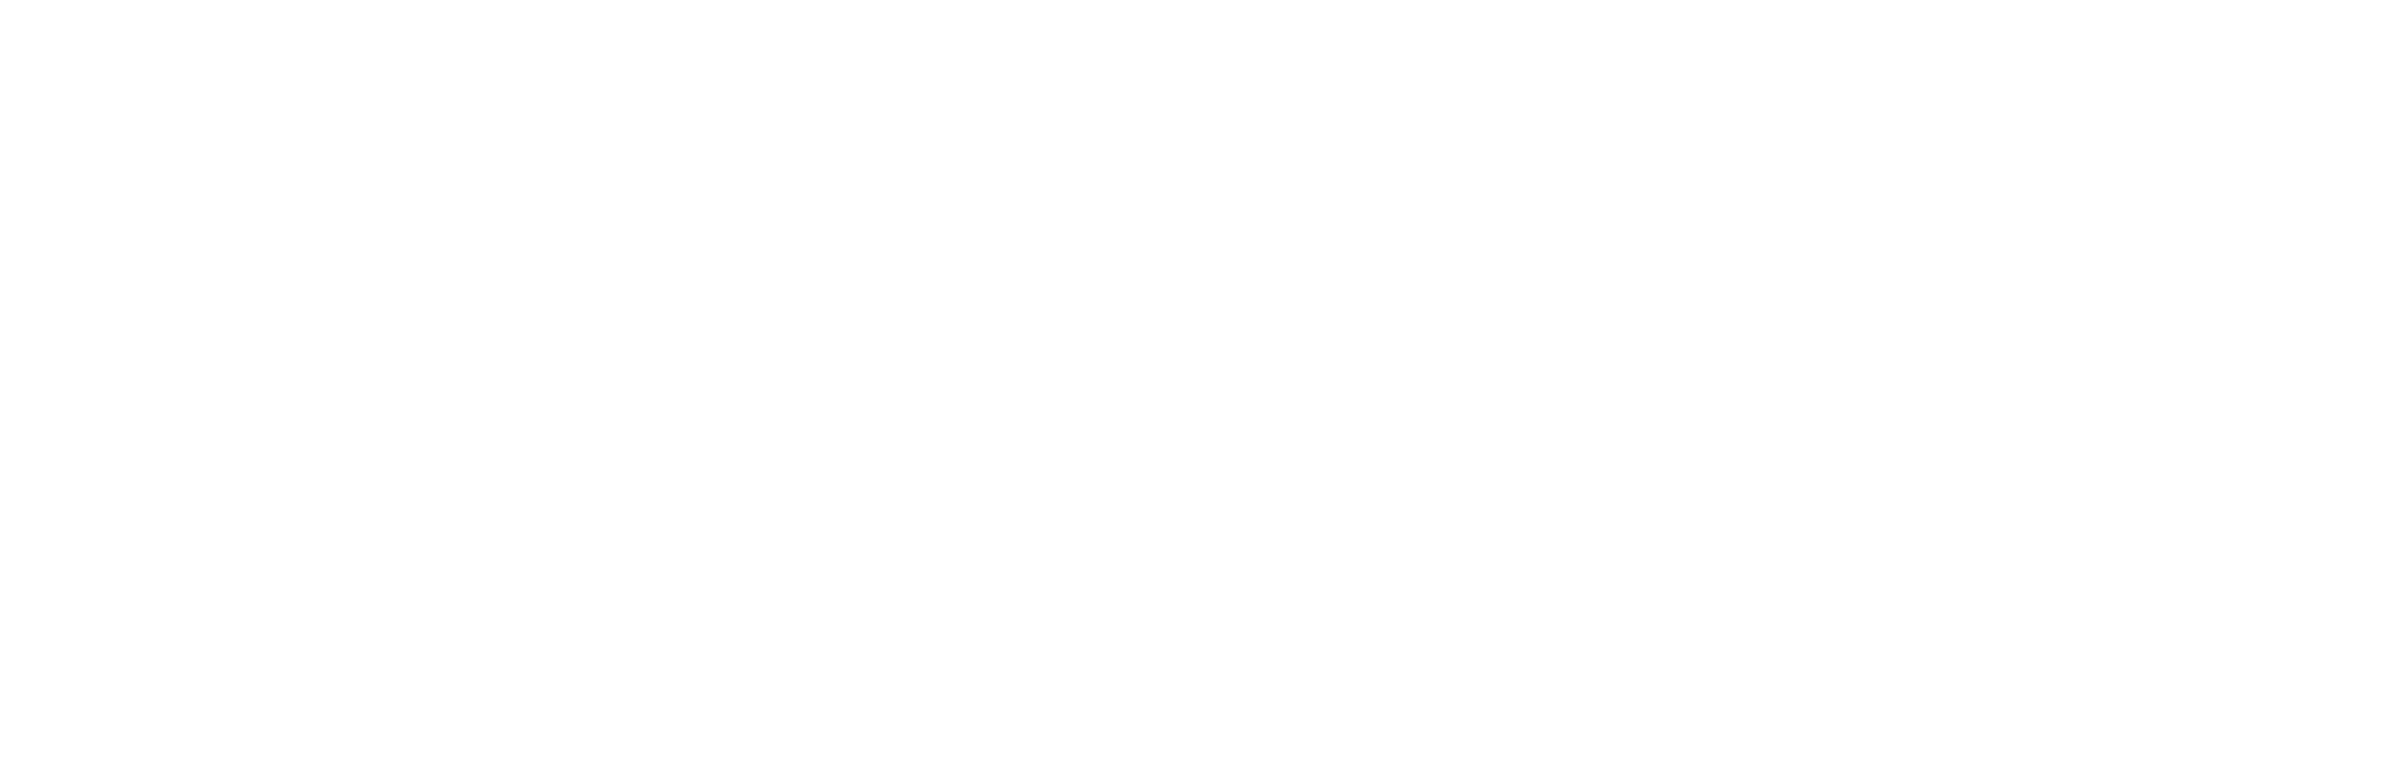 Maine Cabin Masters logo